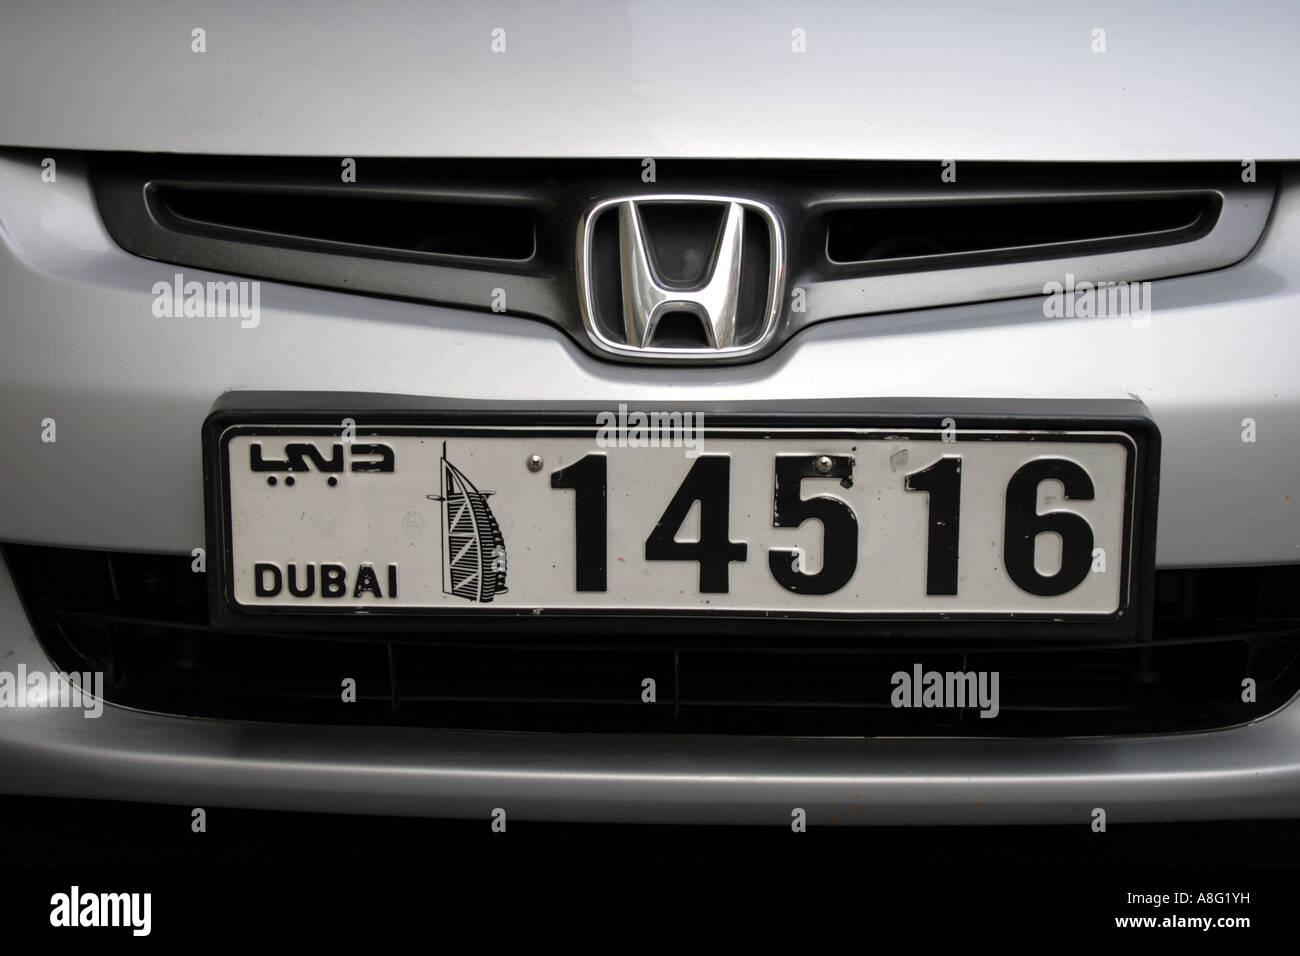 Auto mit Dubai Nummernschild mit Symbol Burj al Arab. Foto: Willy Matheisl Stockfoto